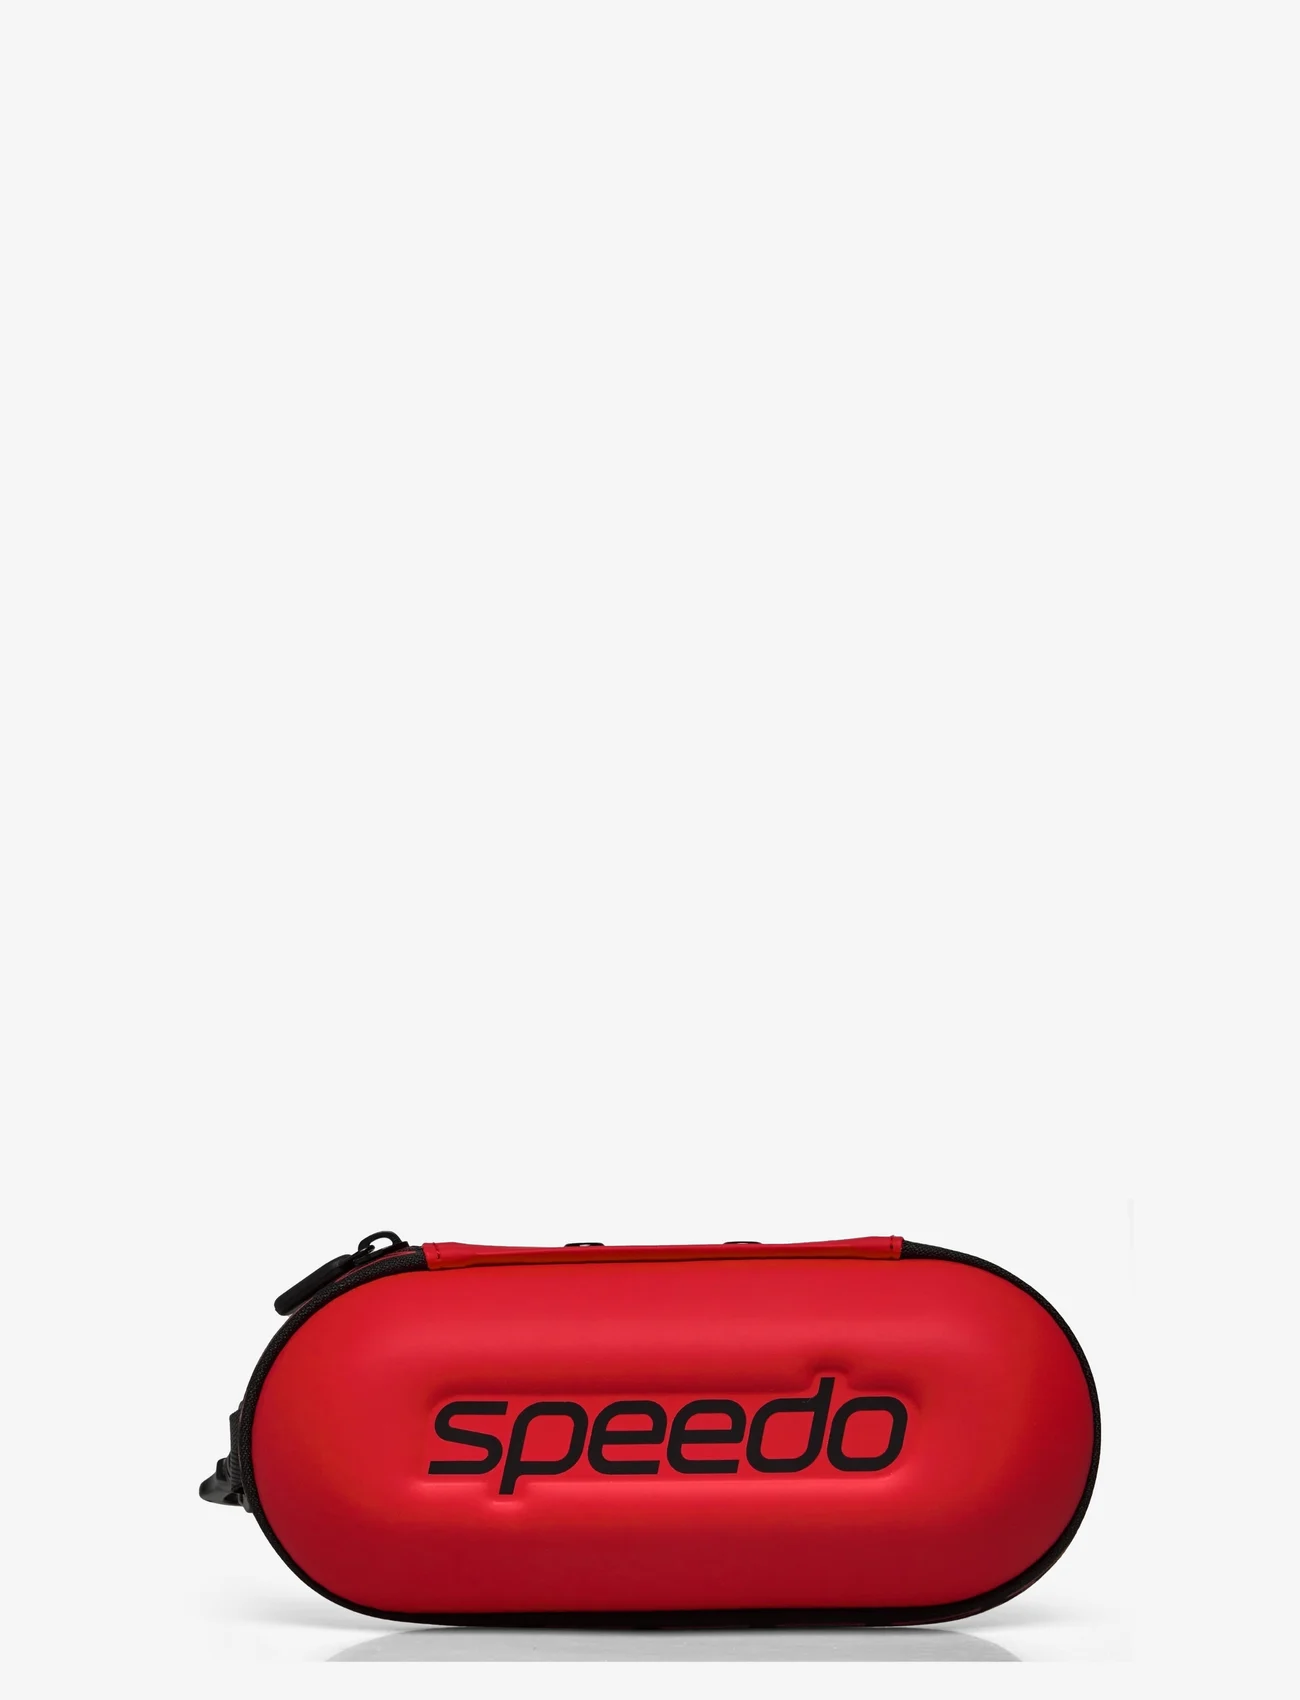 Speedo - Goggles Storage - red - 0